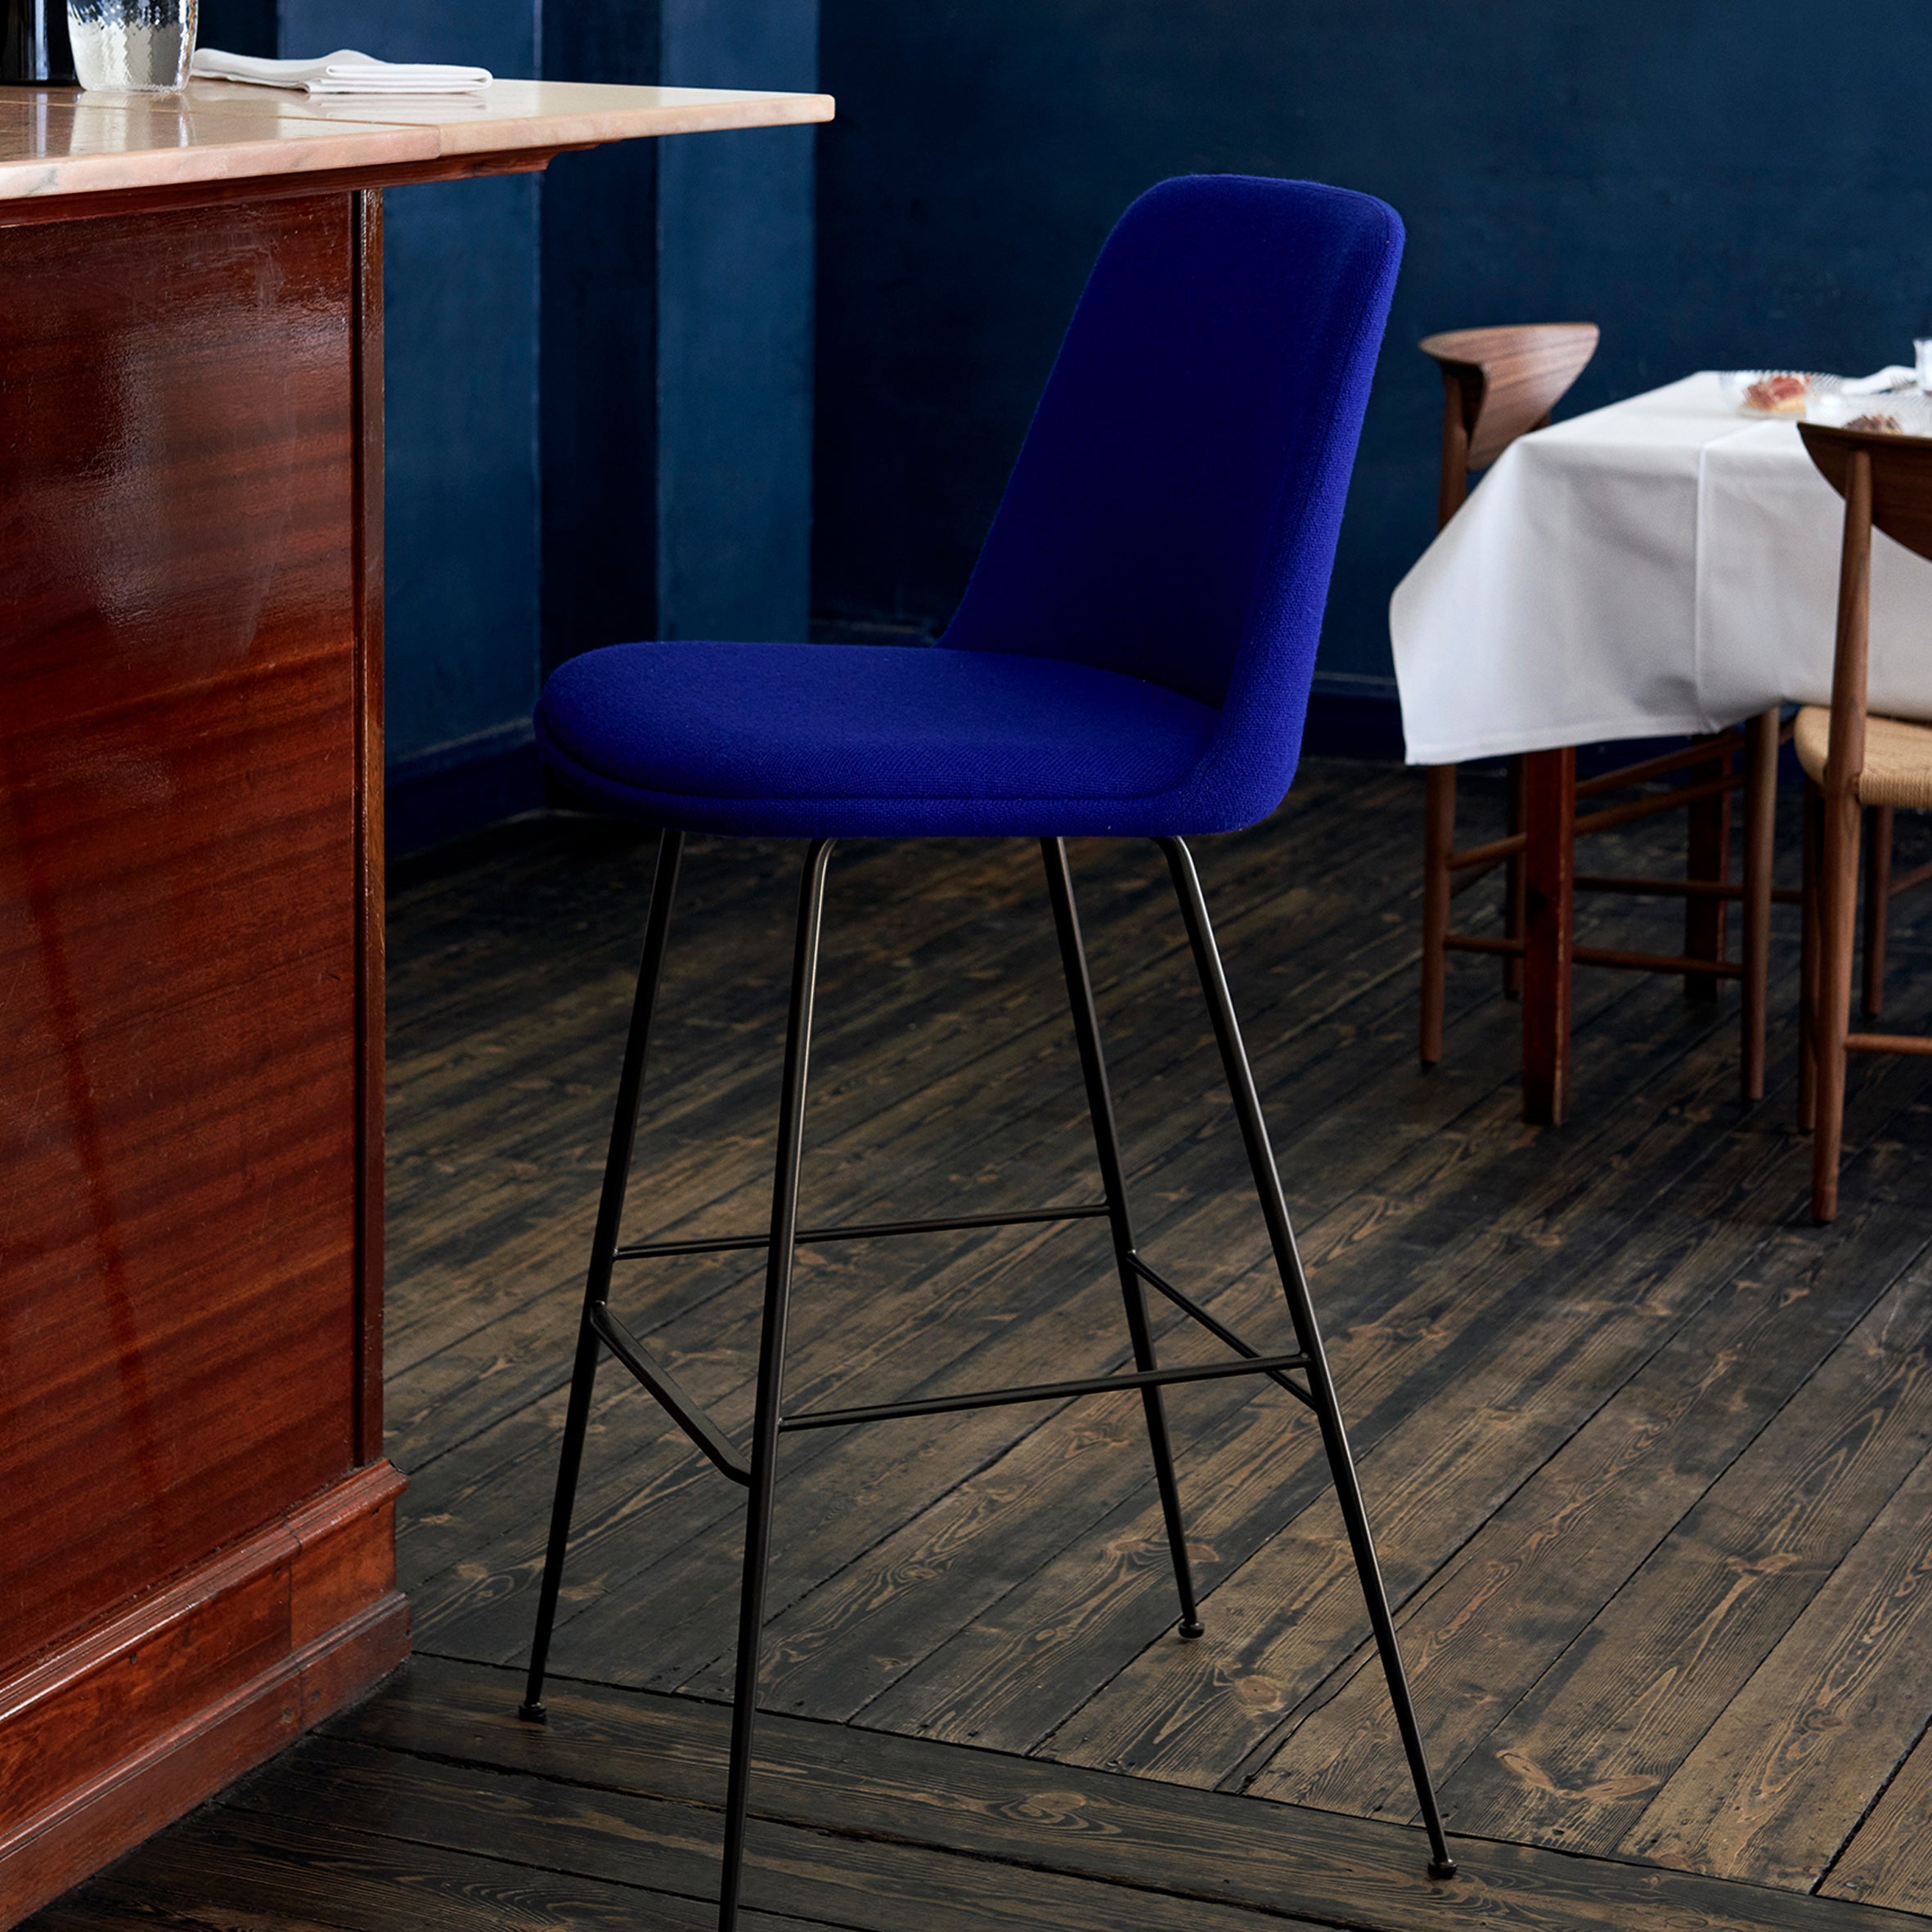 Rely Upholstered Bar Chair HW93 - HW99